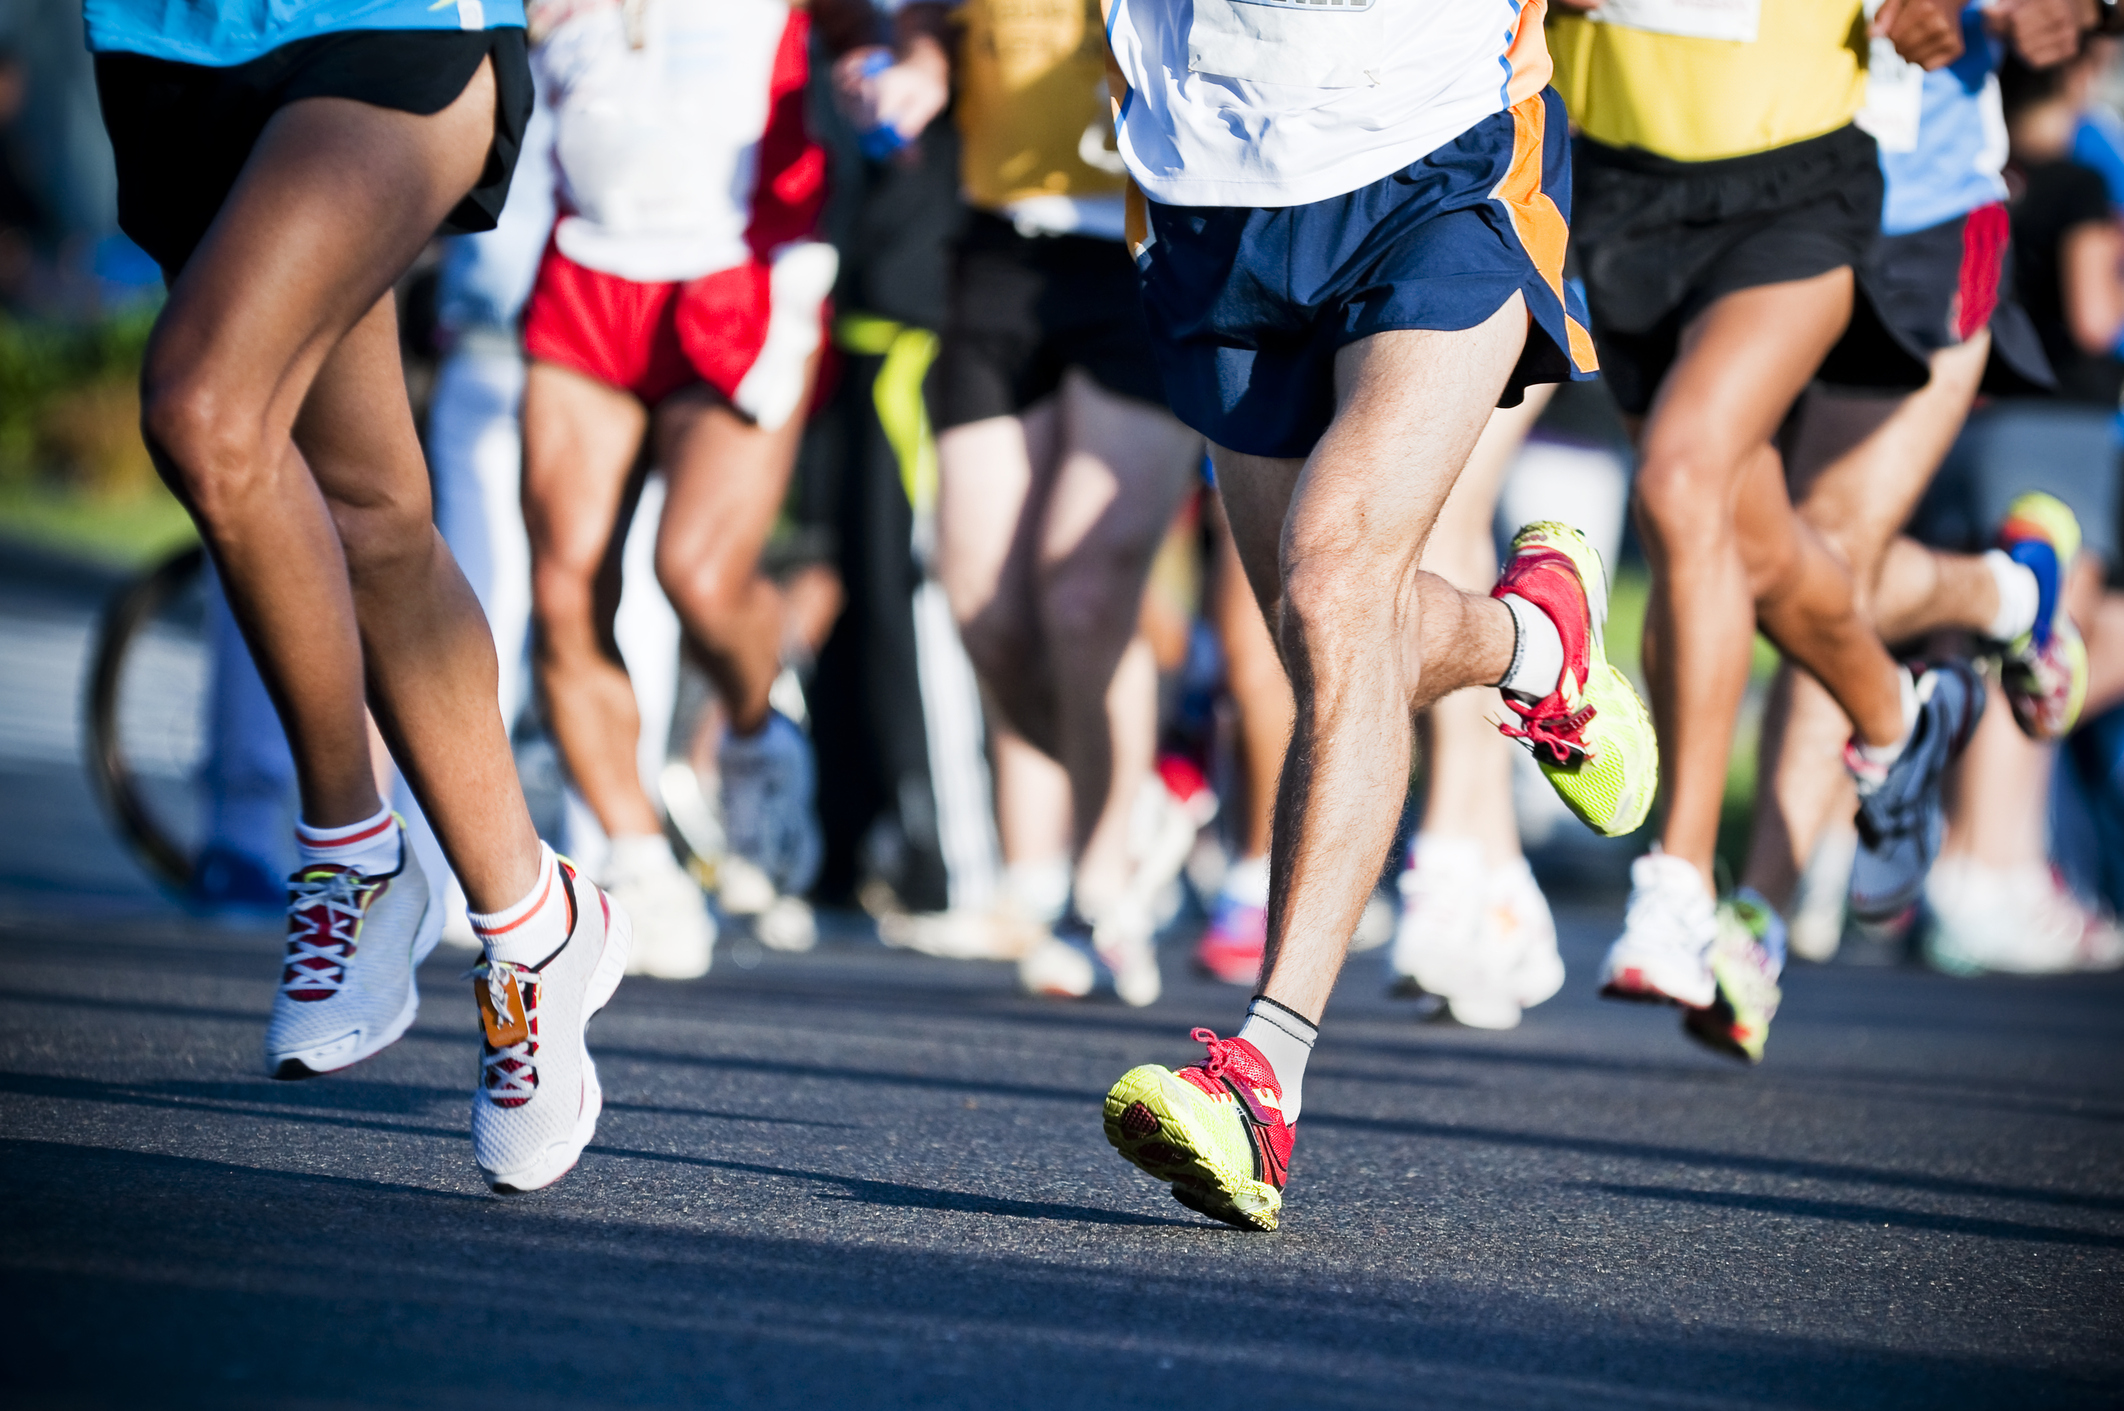 Runners running in a marathon.